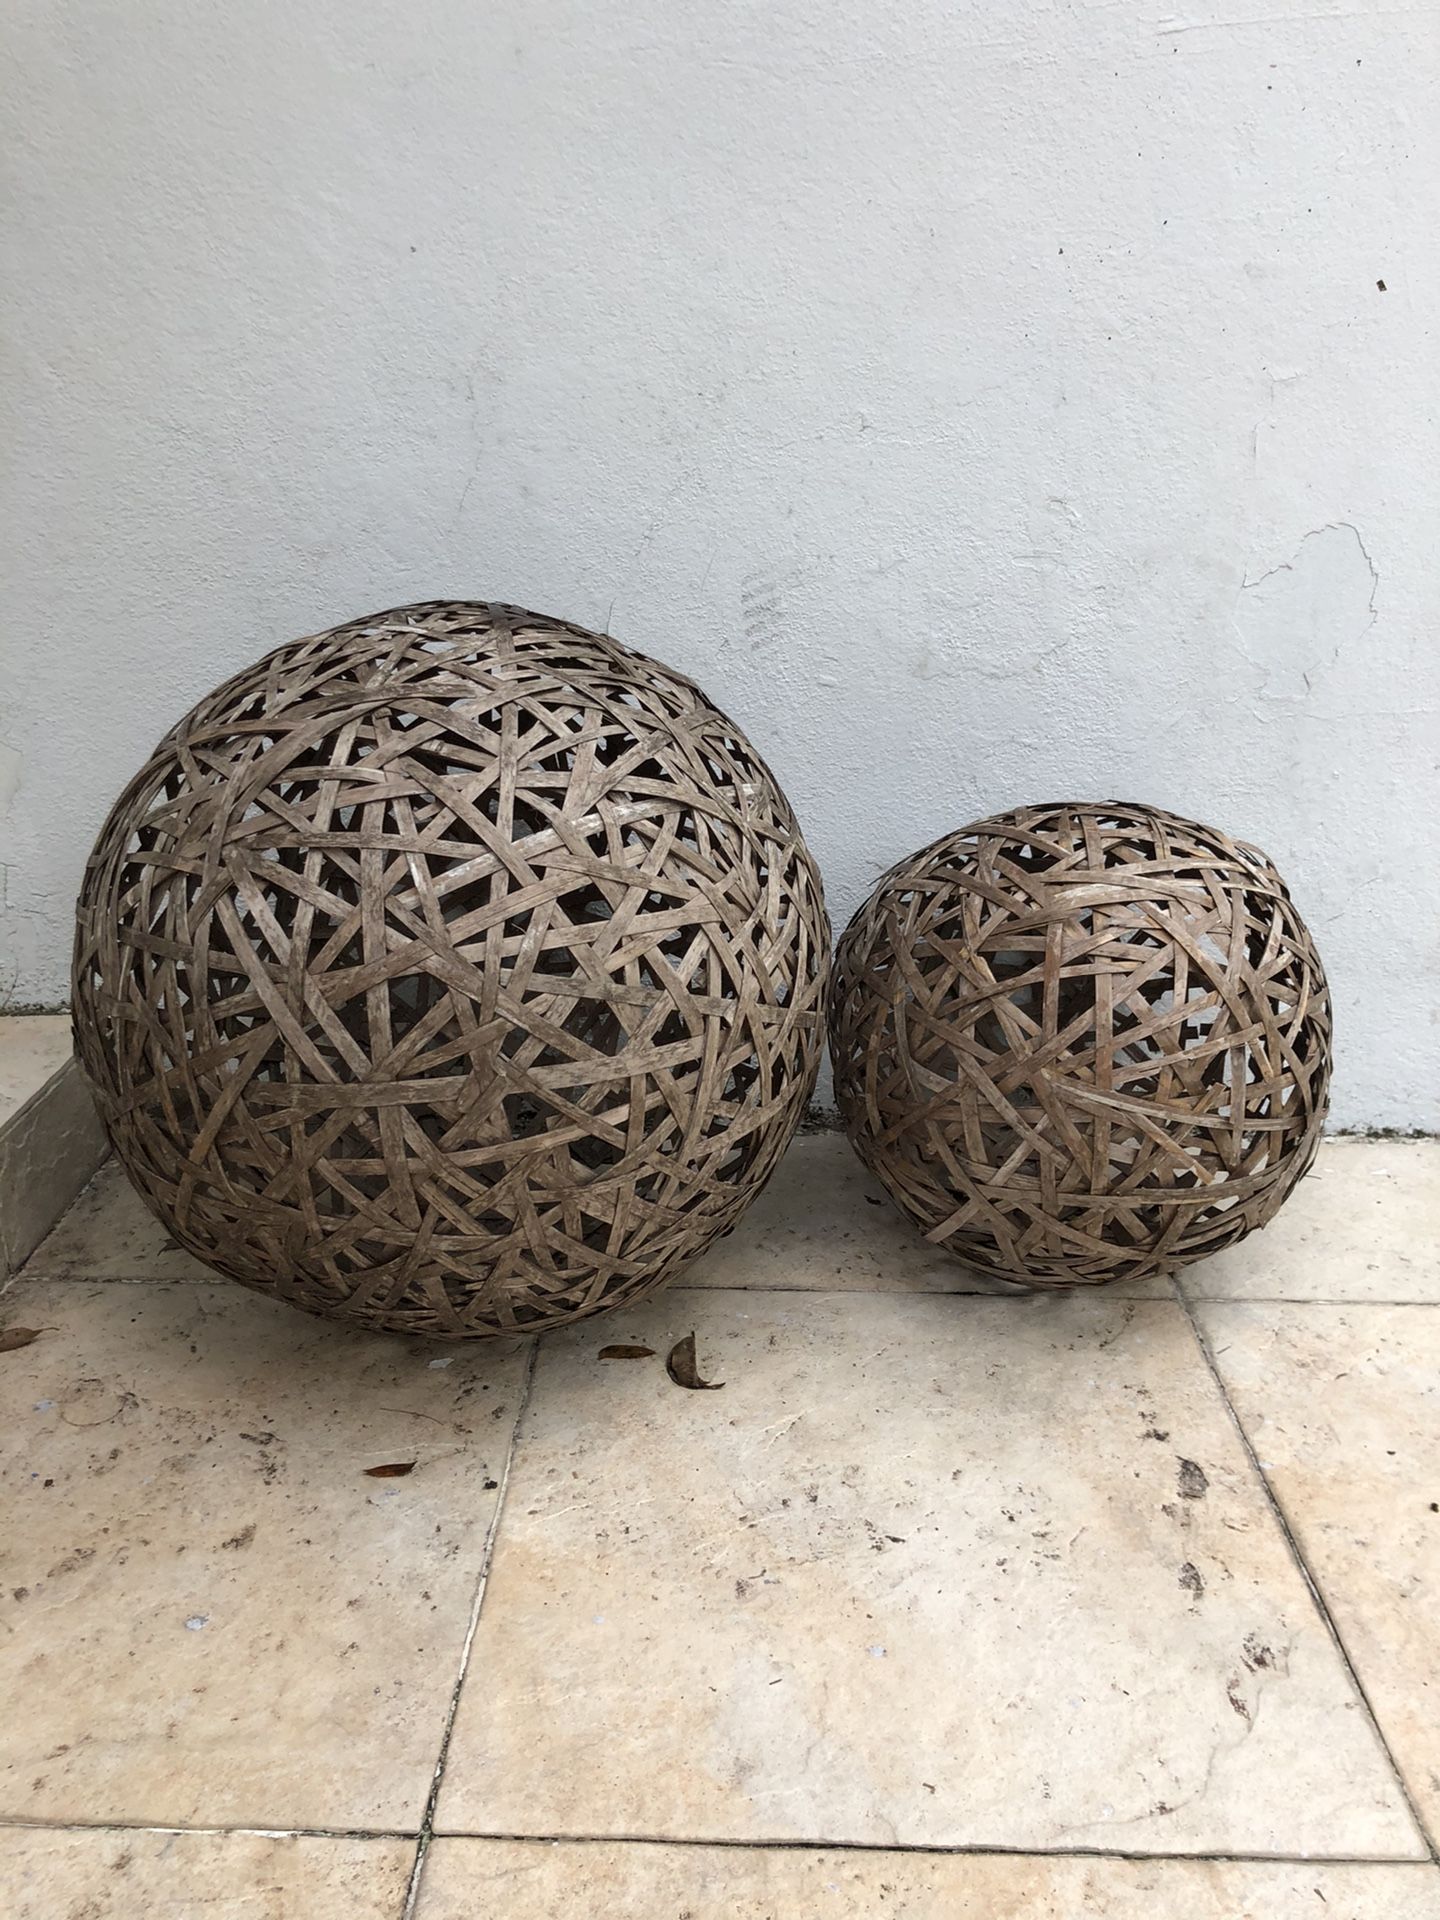 wicker sphere for ornament